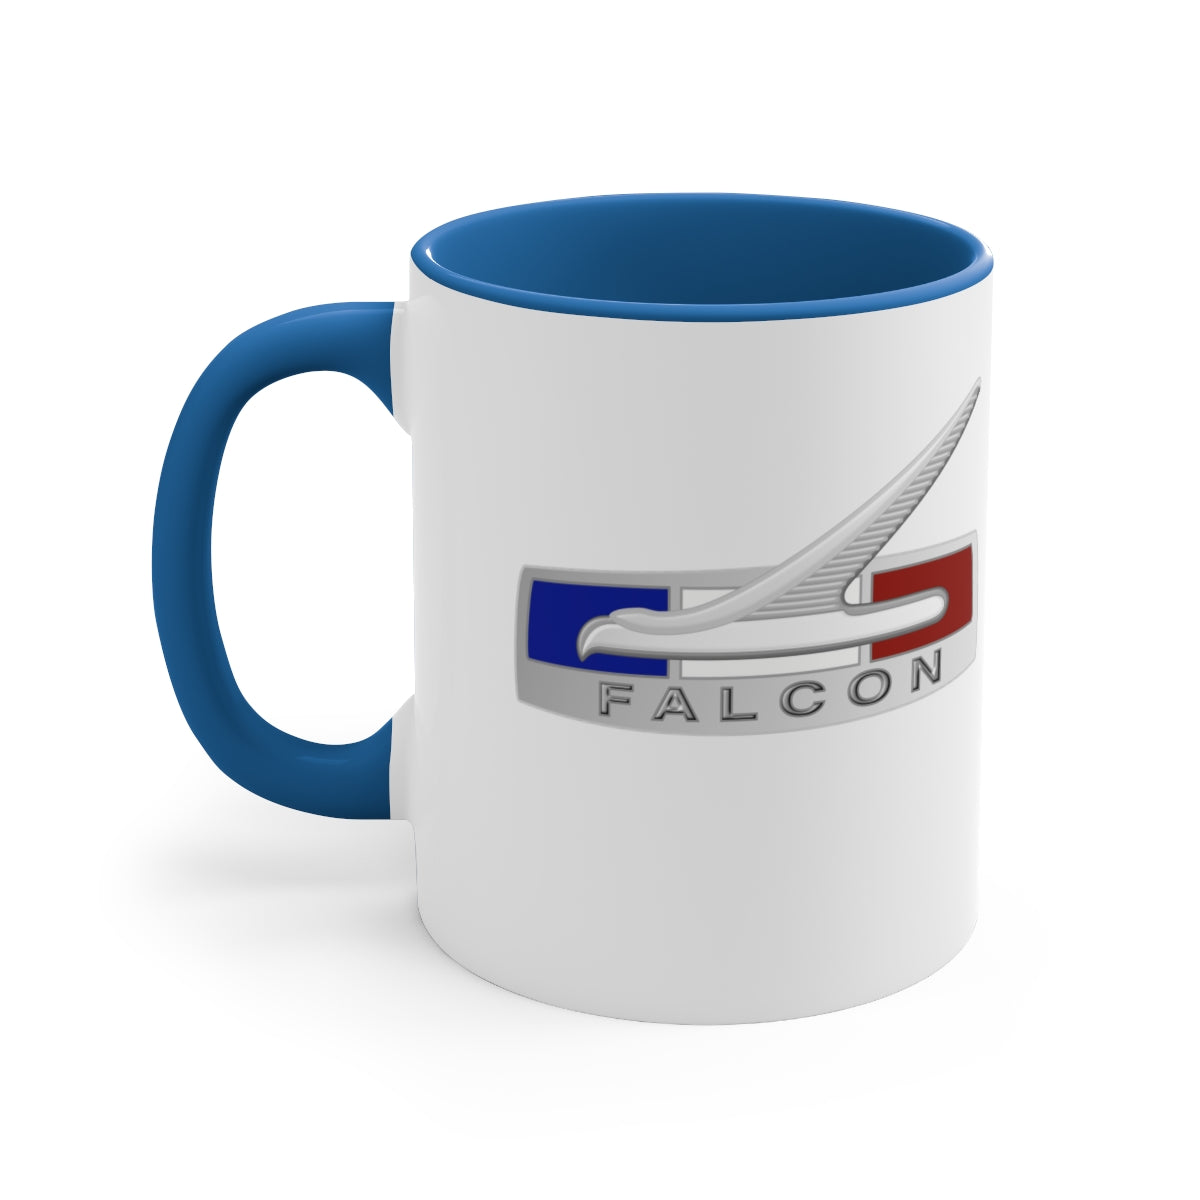 Falcon Coffee Mug, 11oz Ford